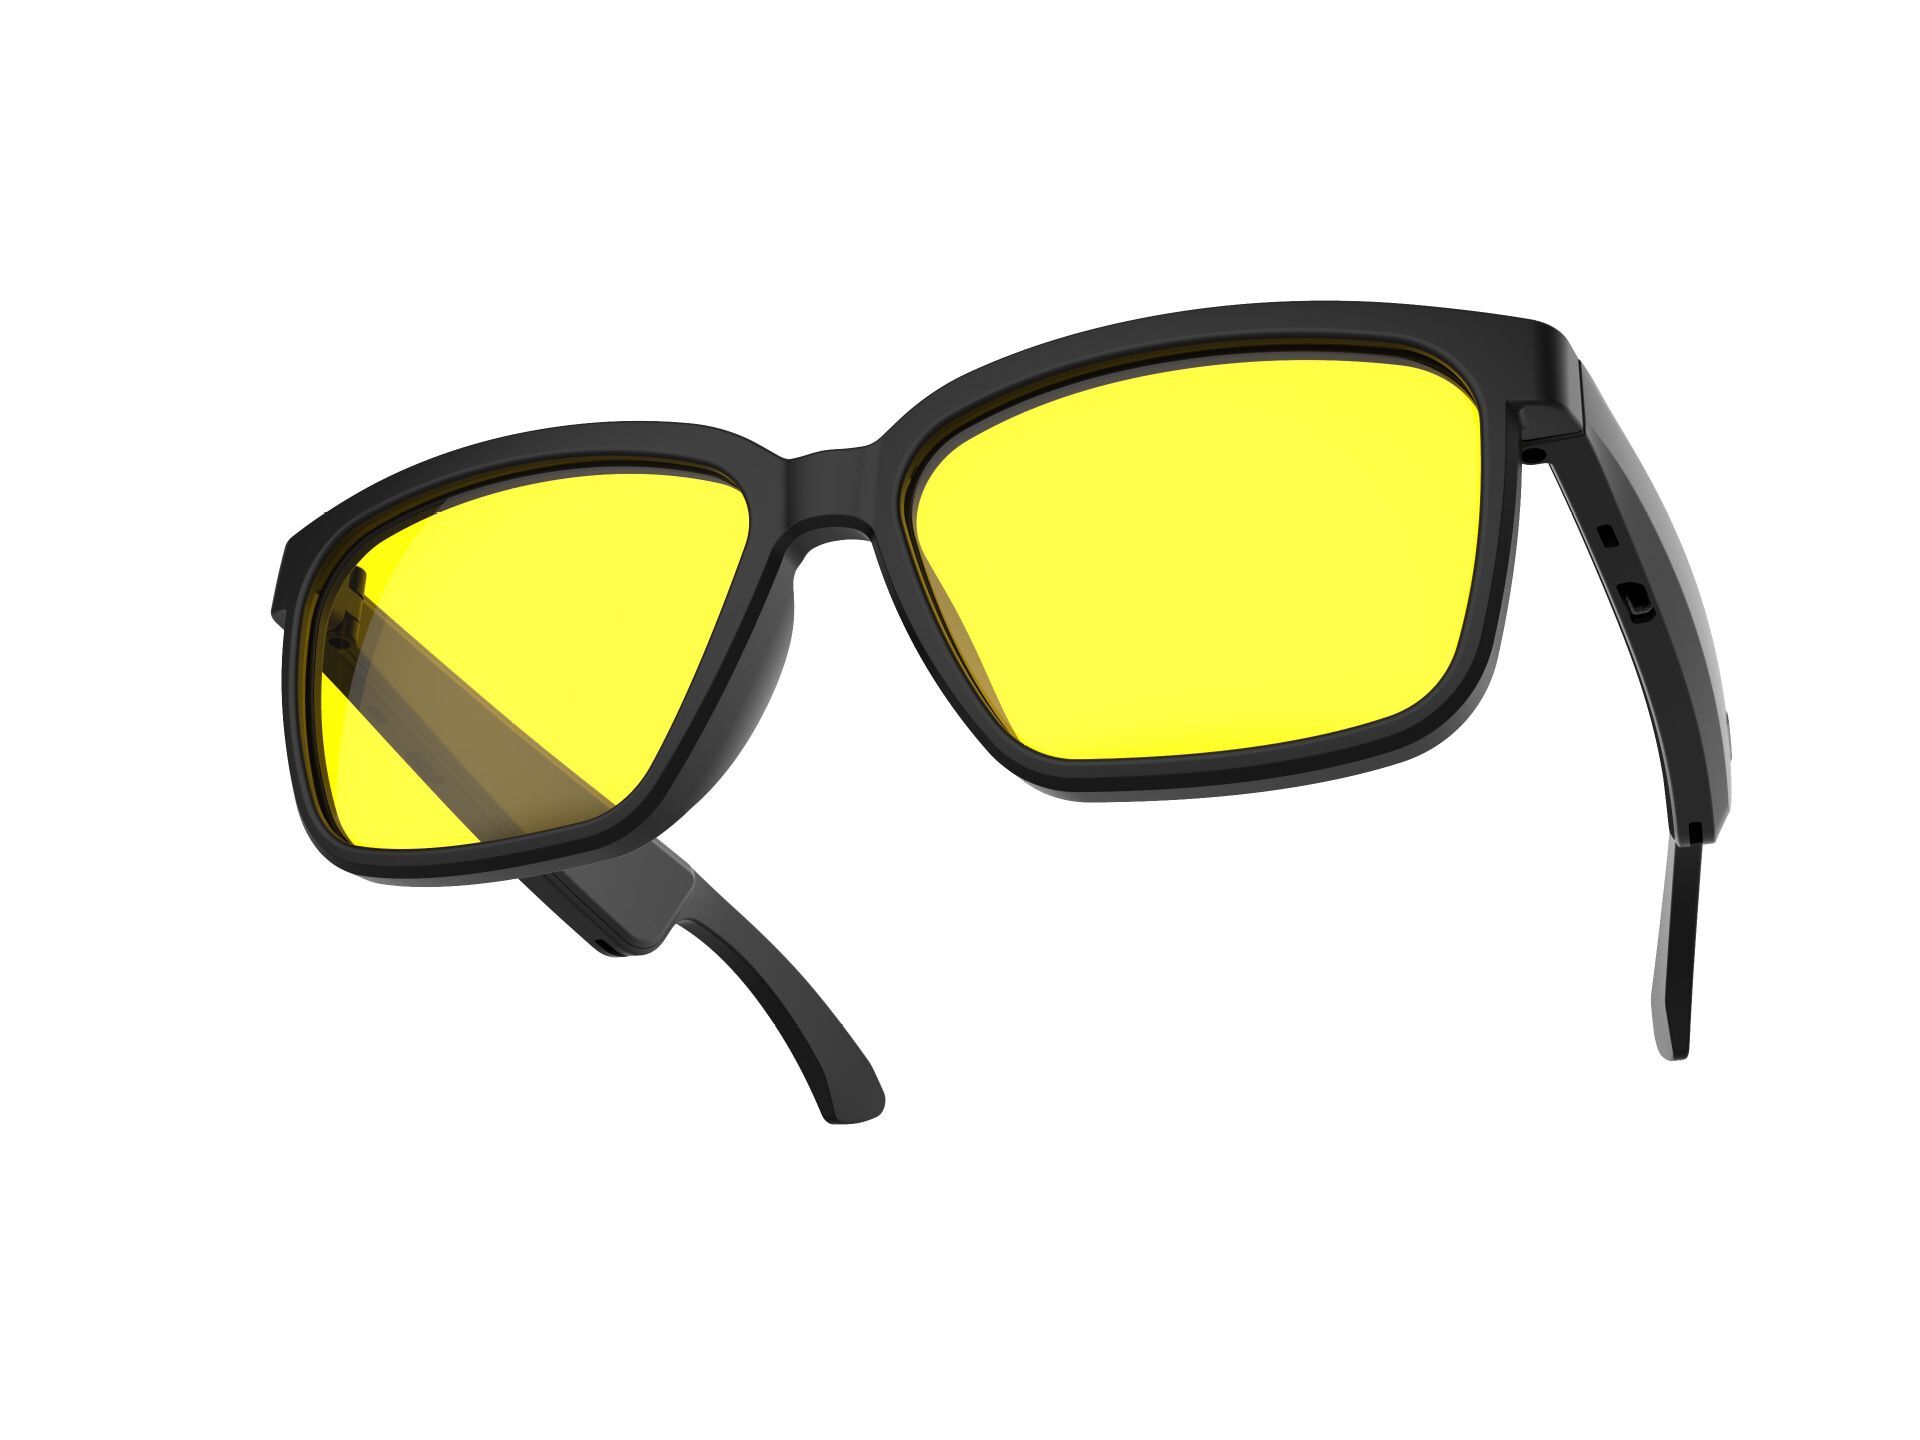 AG2 Smart Bluetooth Glasses Wireless Bluetooth Sunglasses Audio Headsets Sport Driving Glasses Outdoor Audio Sunglasses Earphones